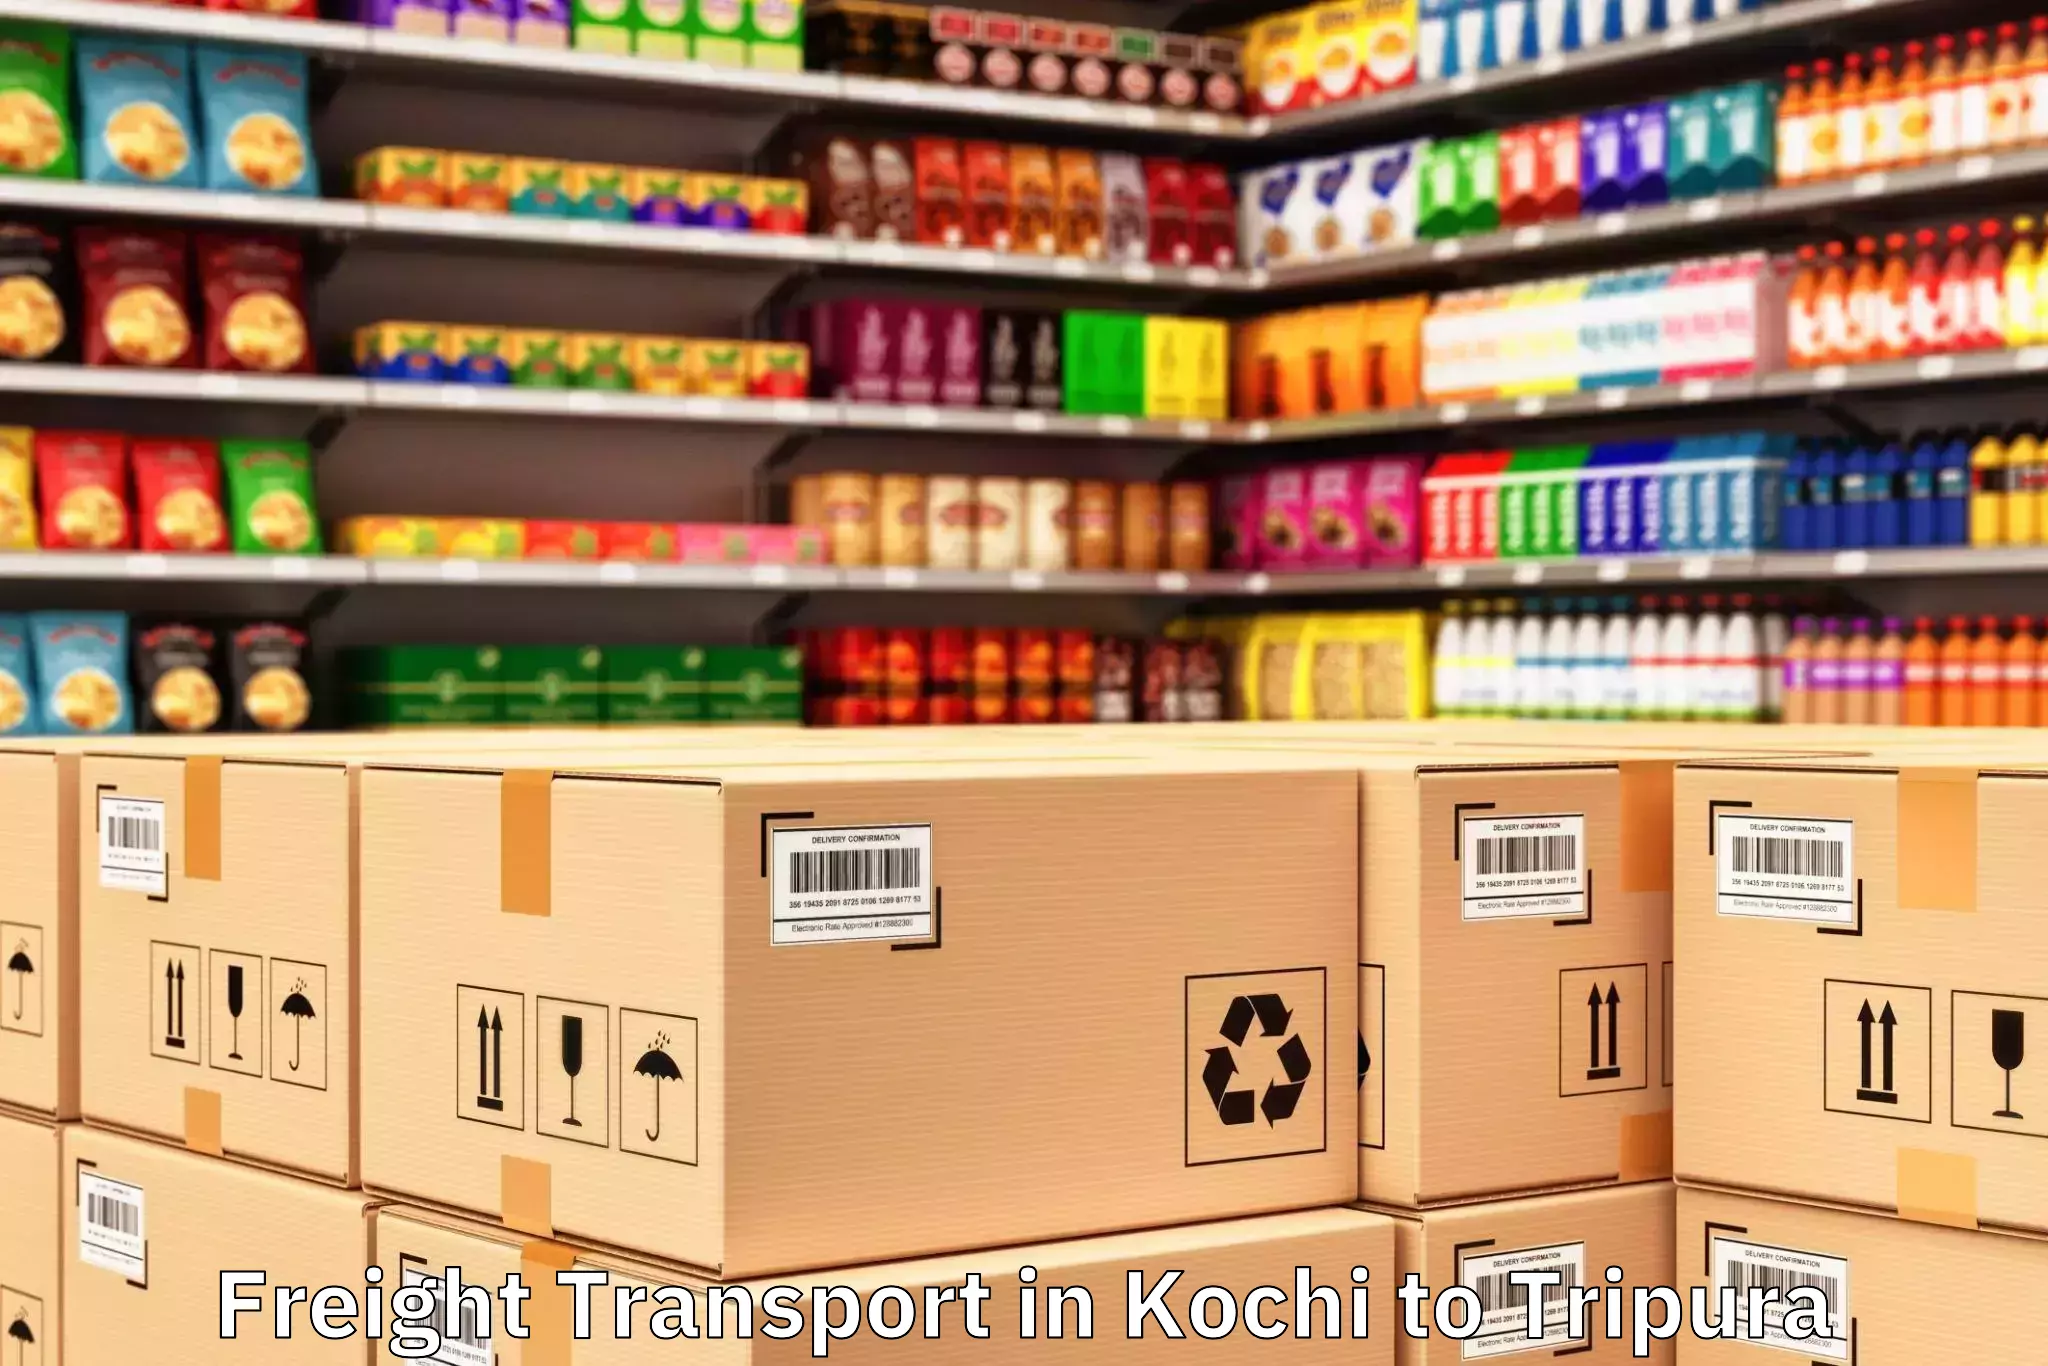 Efficient Kochi to Tripura Freight Transport